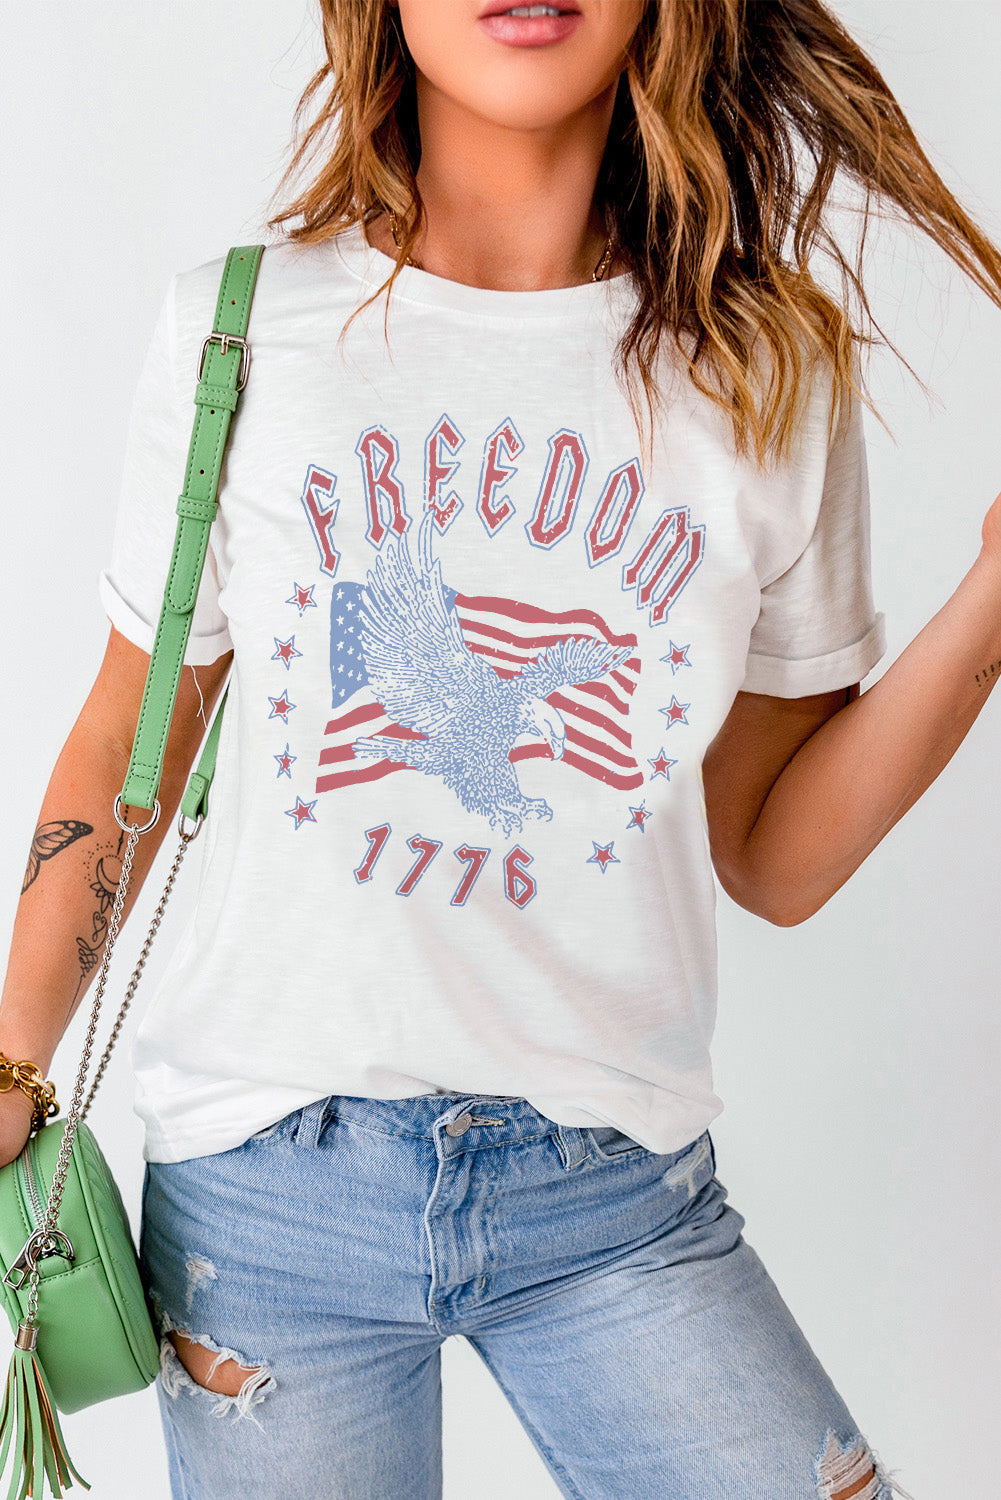 Women's Full Size FREEDOM 1776 Graphic Tee